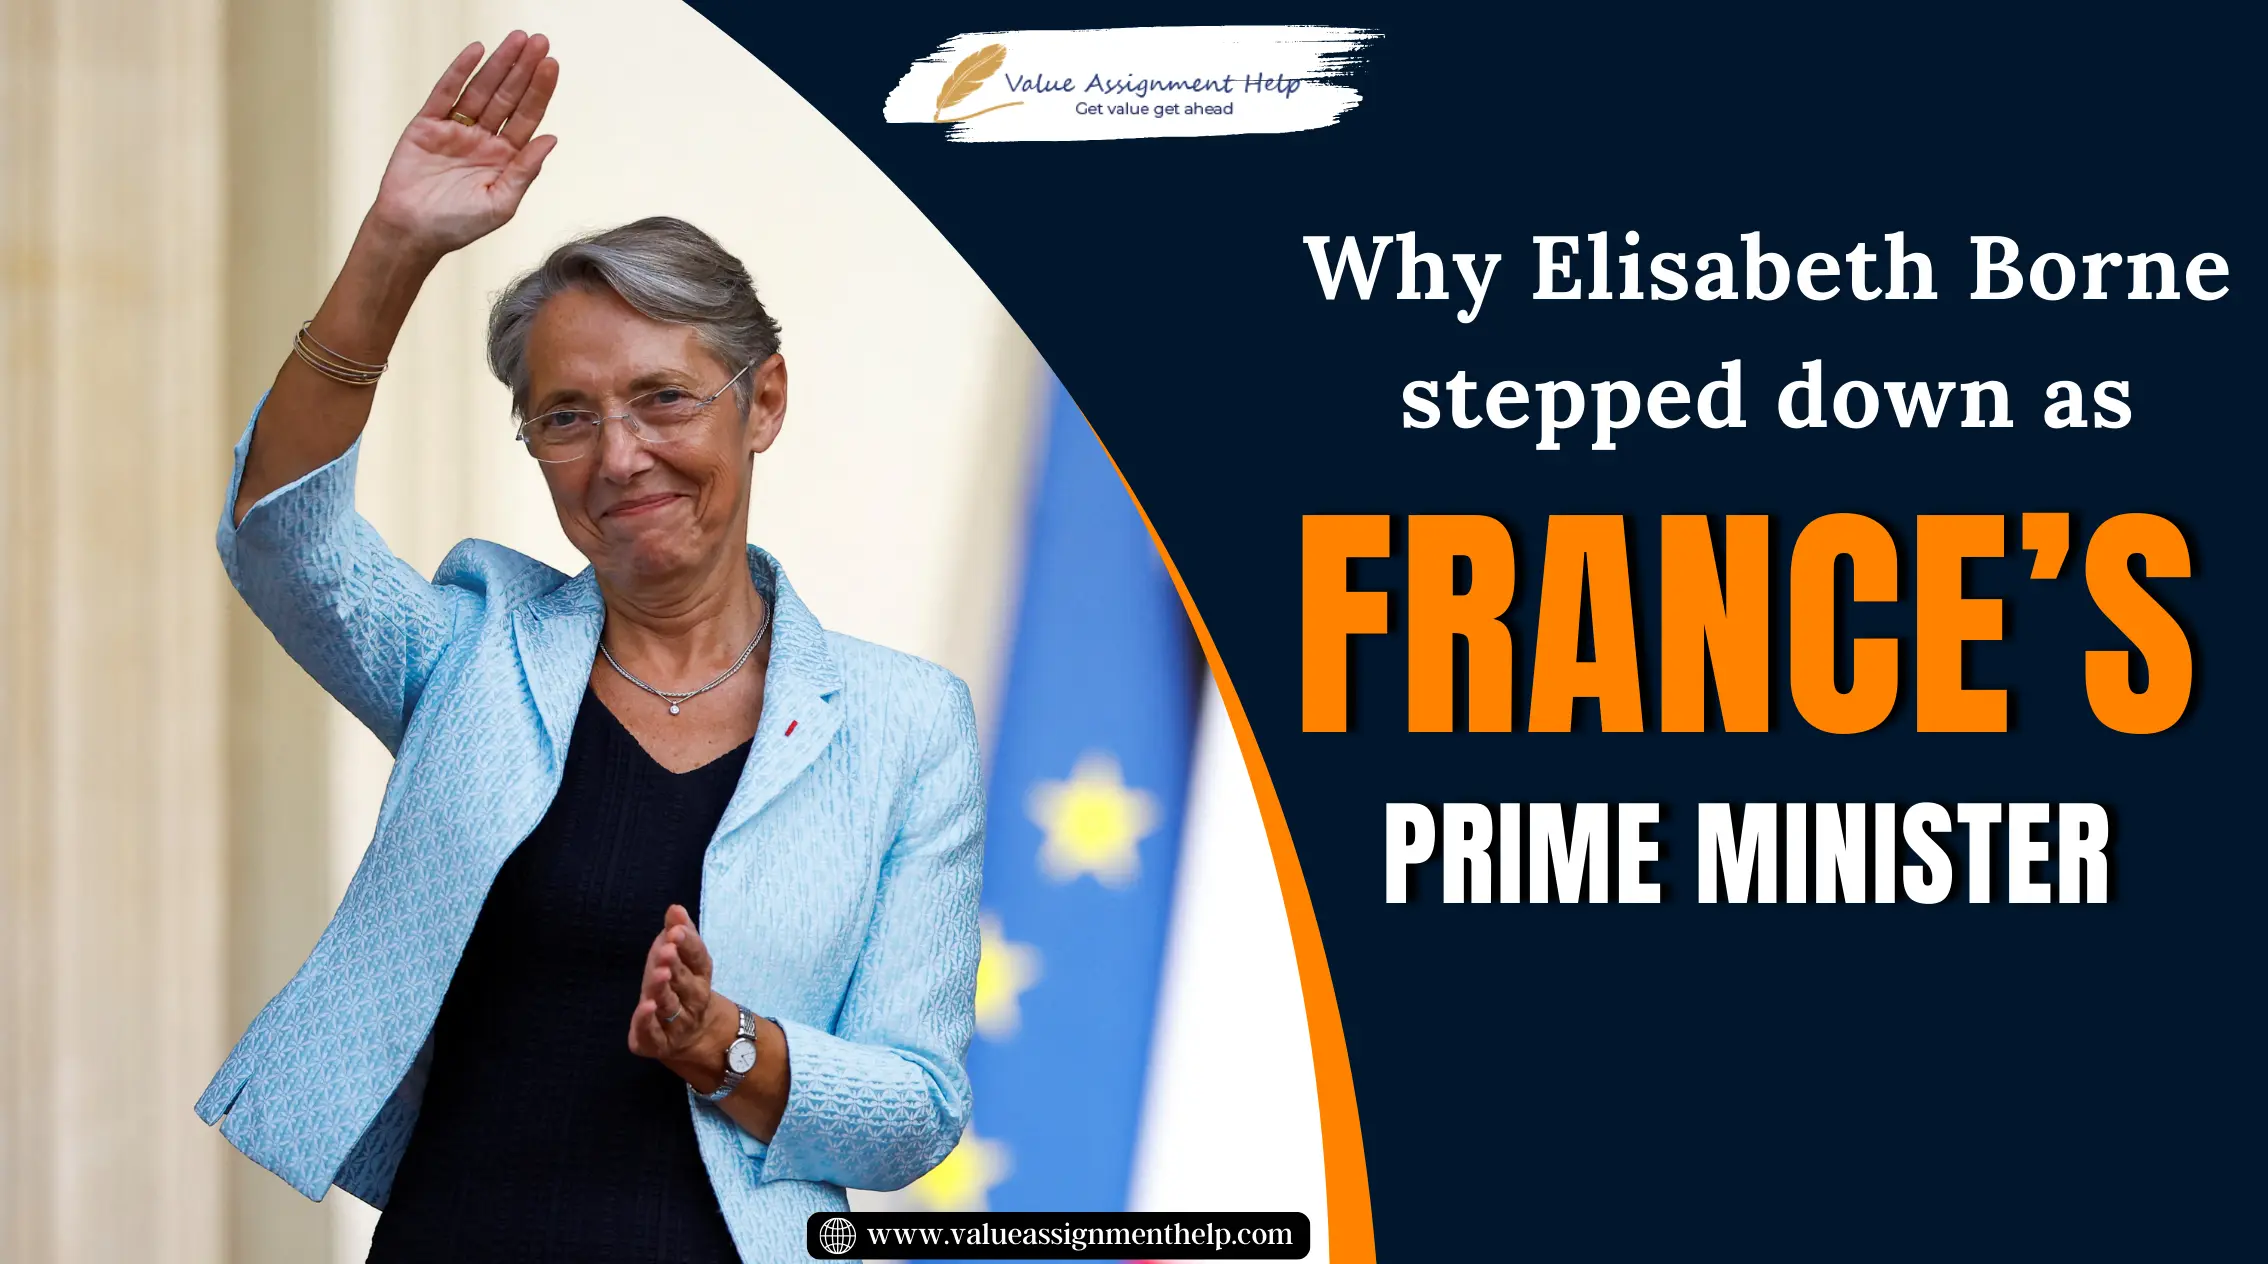  Why Elisabeth Borne stepped down as France’s Prime minister